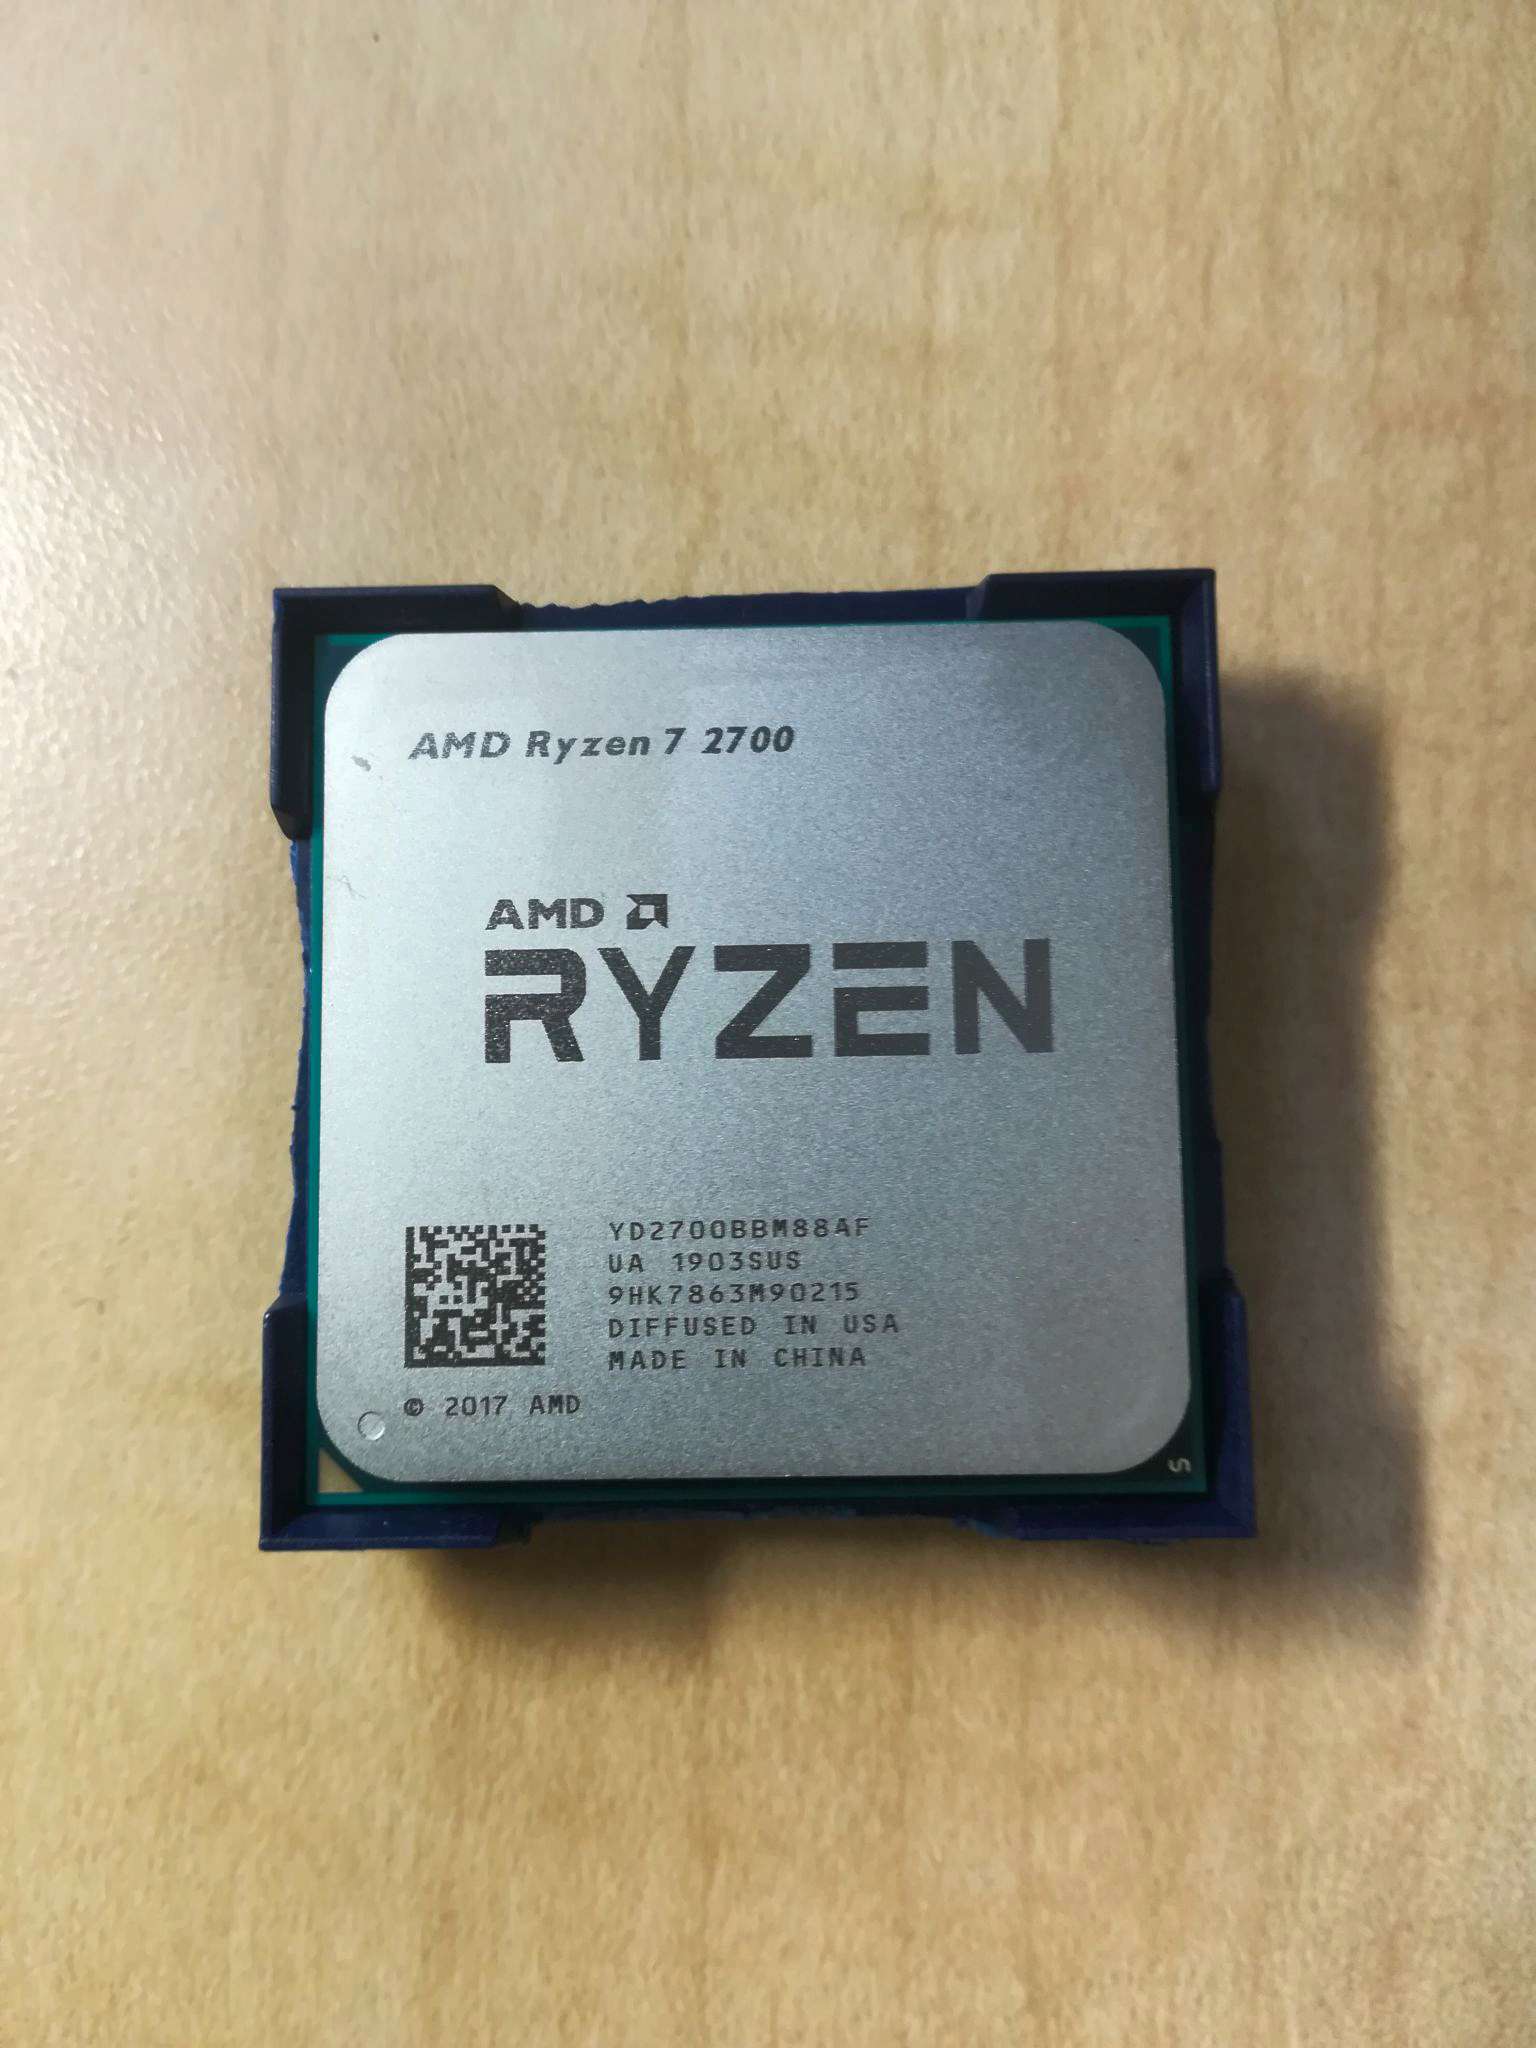 Ryzen 7 2700 купить. Ryzen 7 2700. AMD 7 2700. AMD Ryzen 7 2700 eight-Core Processor 3.20 GHZ. АМД райзен 7 2700.